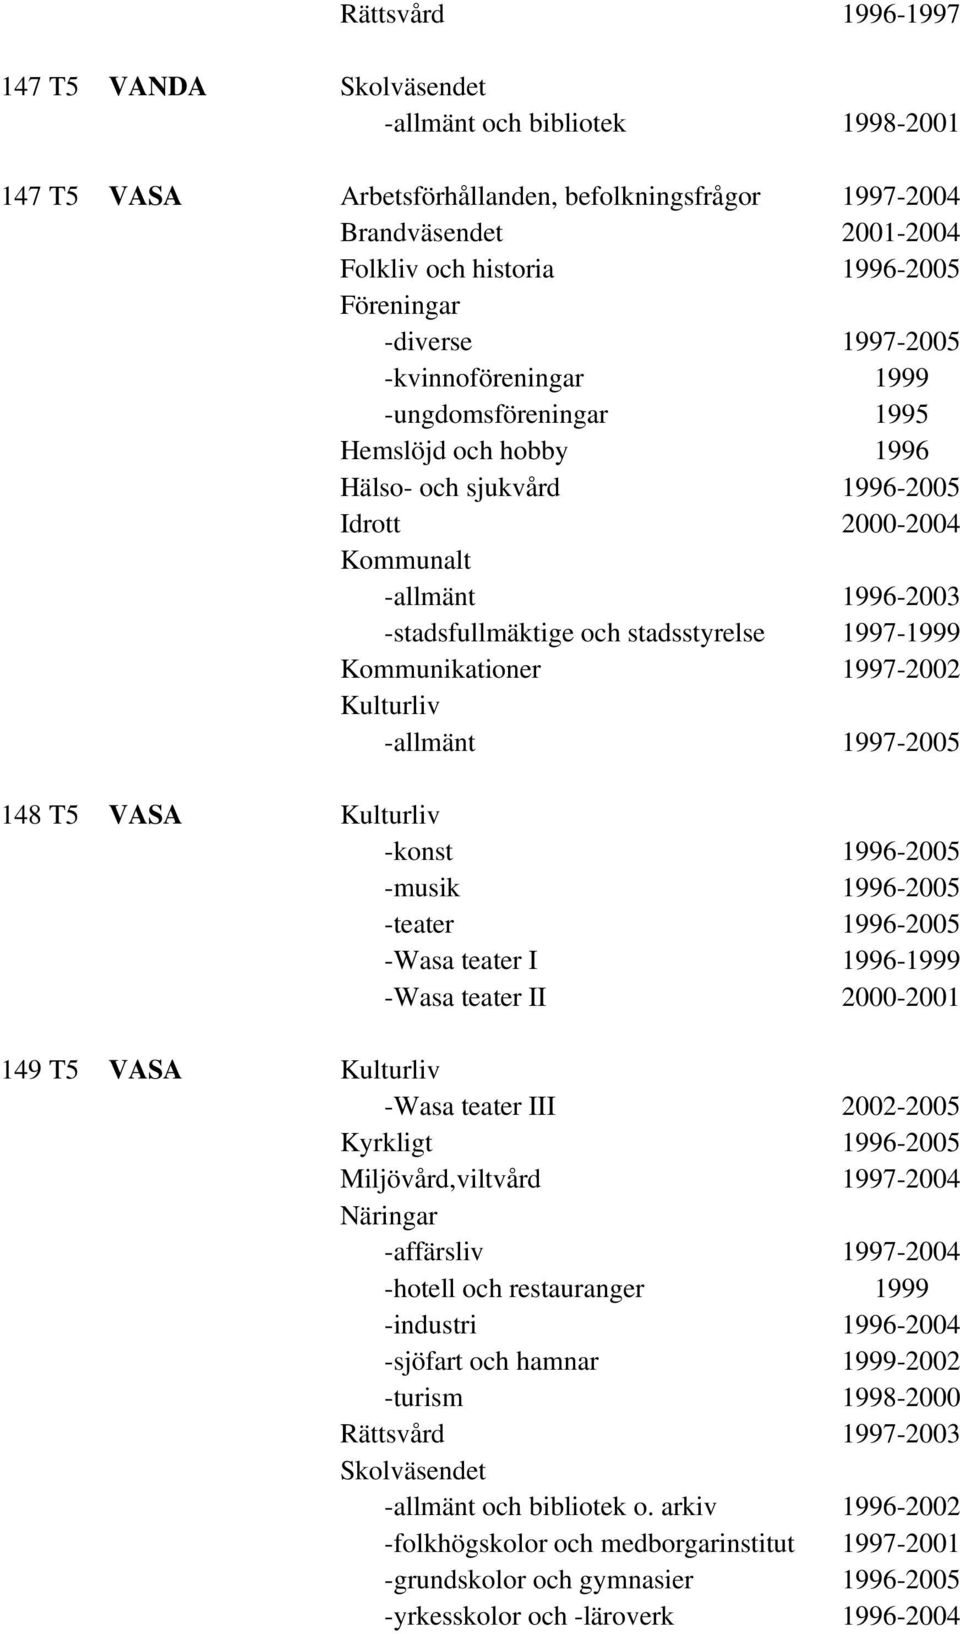 1997-1999 Kommunikationer 1997-2002 Kulturliv -allmänt 1997-2005 148 T5 VASA Kulturliv -konst 1996-2005 -musik 1996-2005 -teater 1996-2005 -Wasa teater I 1996-1999 -Wasa teater II 2000-2001 149 T5